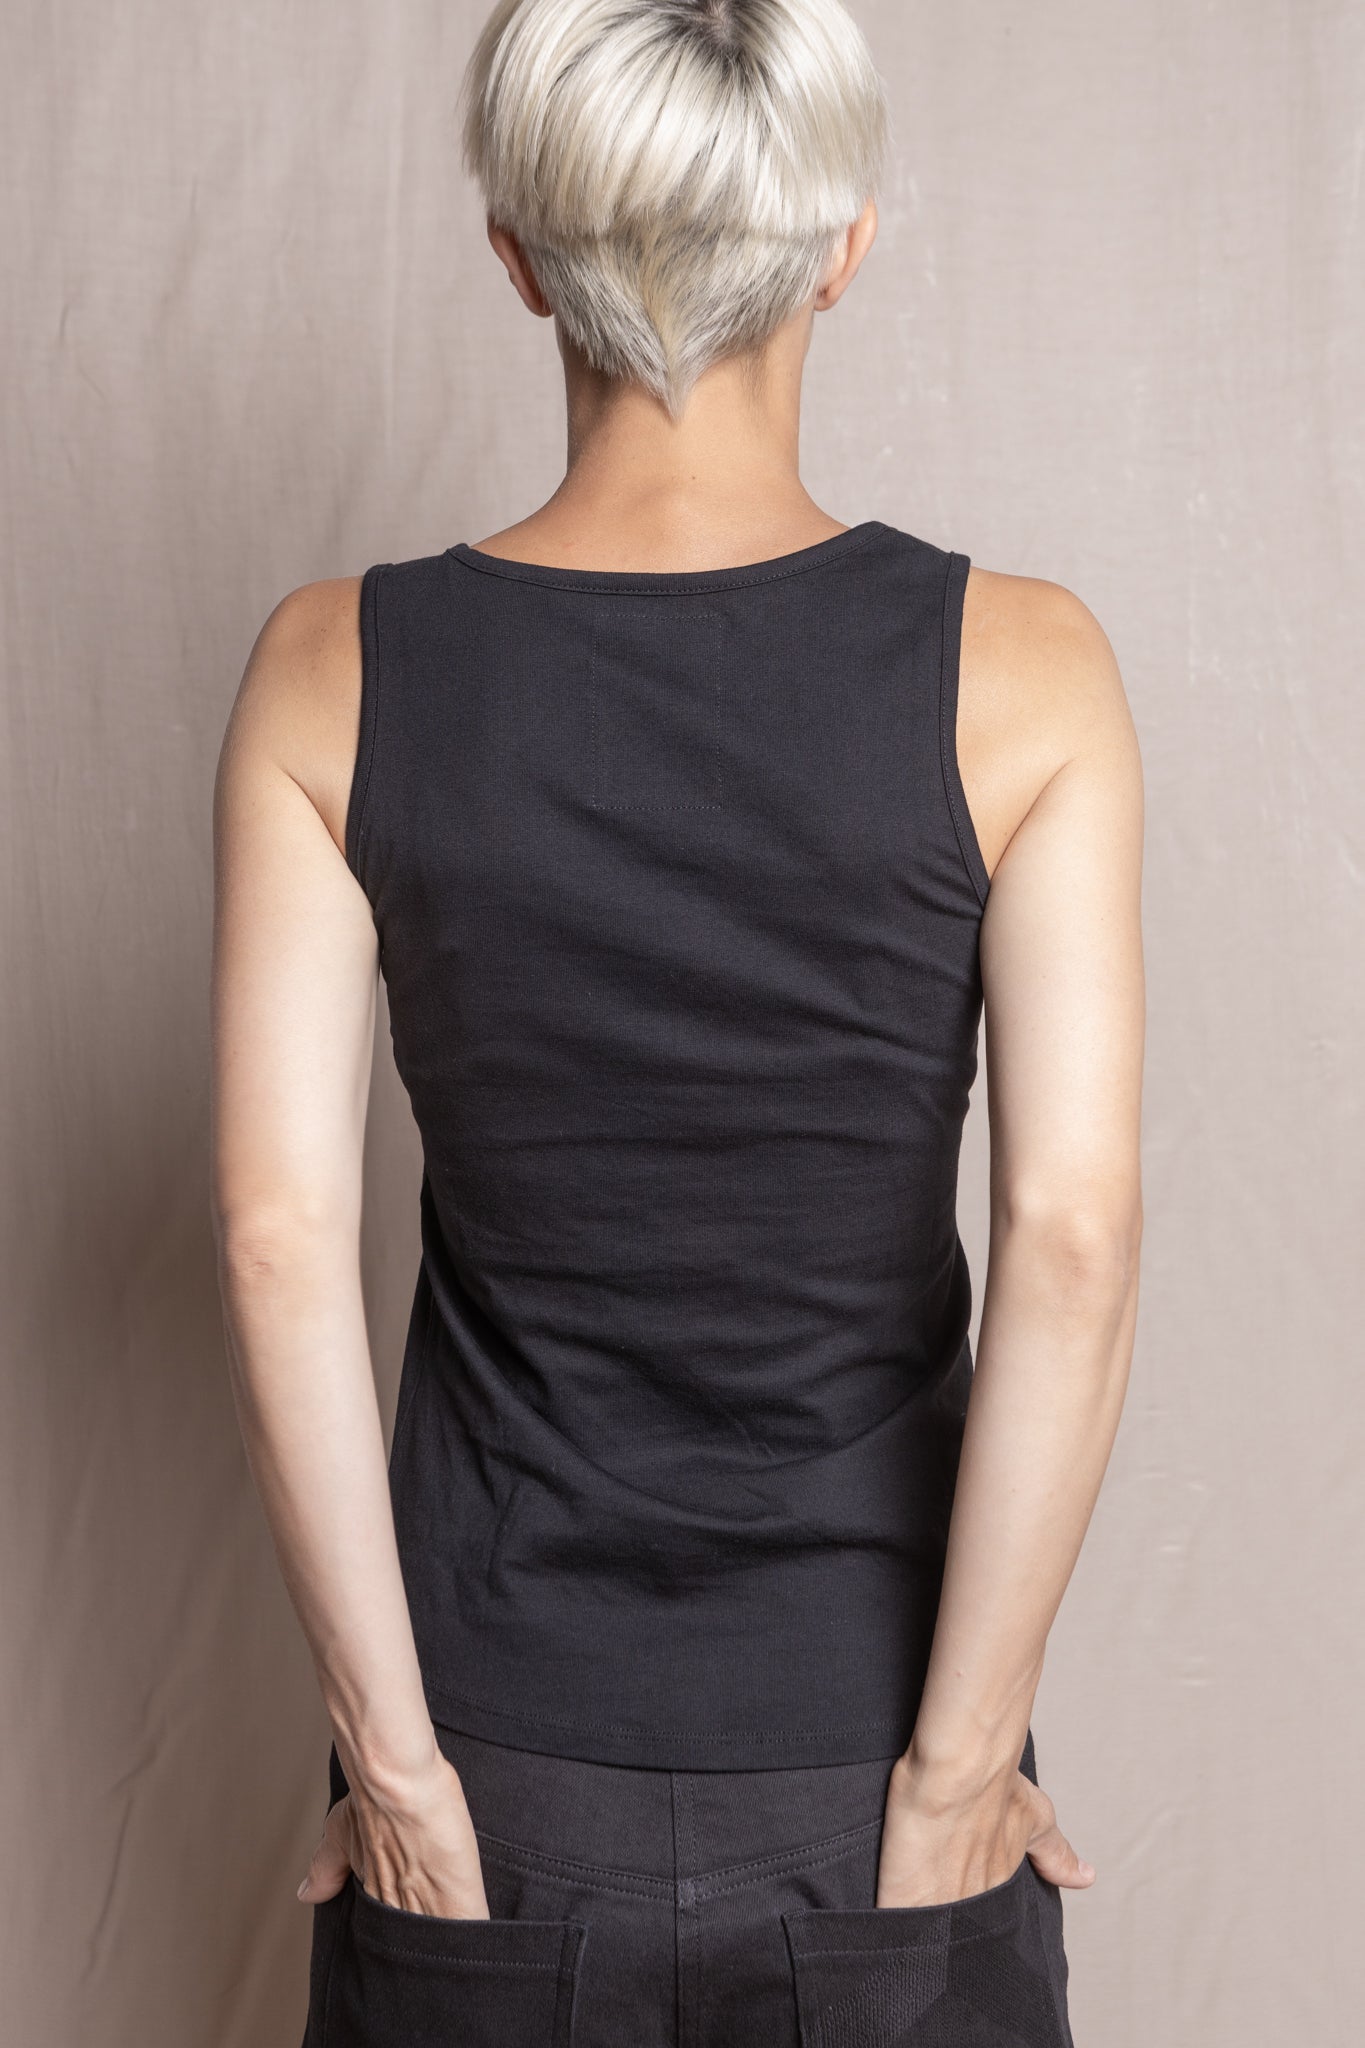 Up-shirt for women, tank top, diamond motif  | Black - Reet Aus